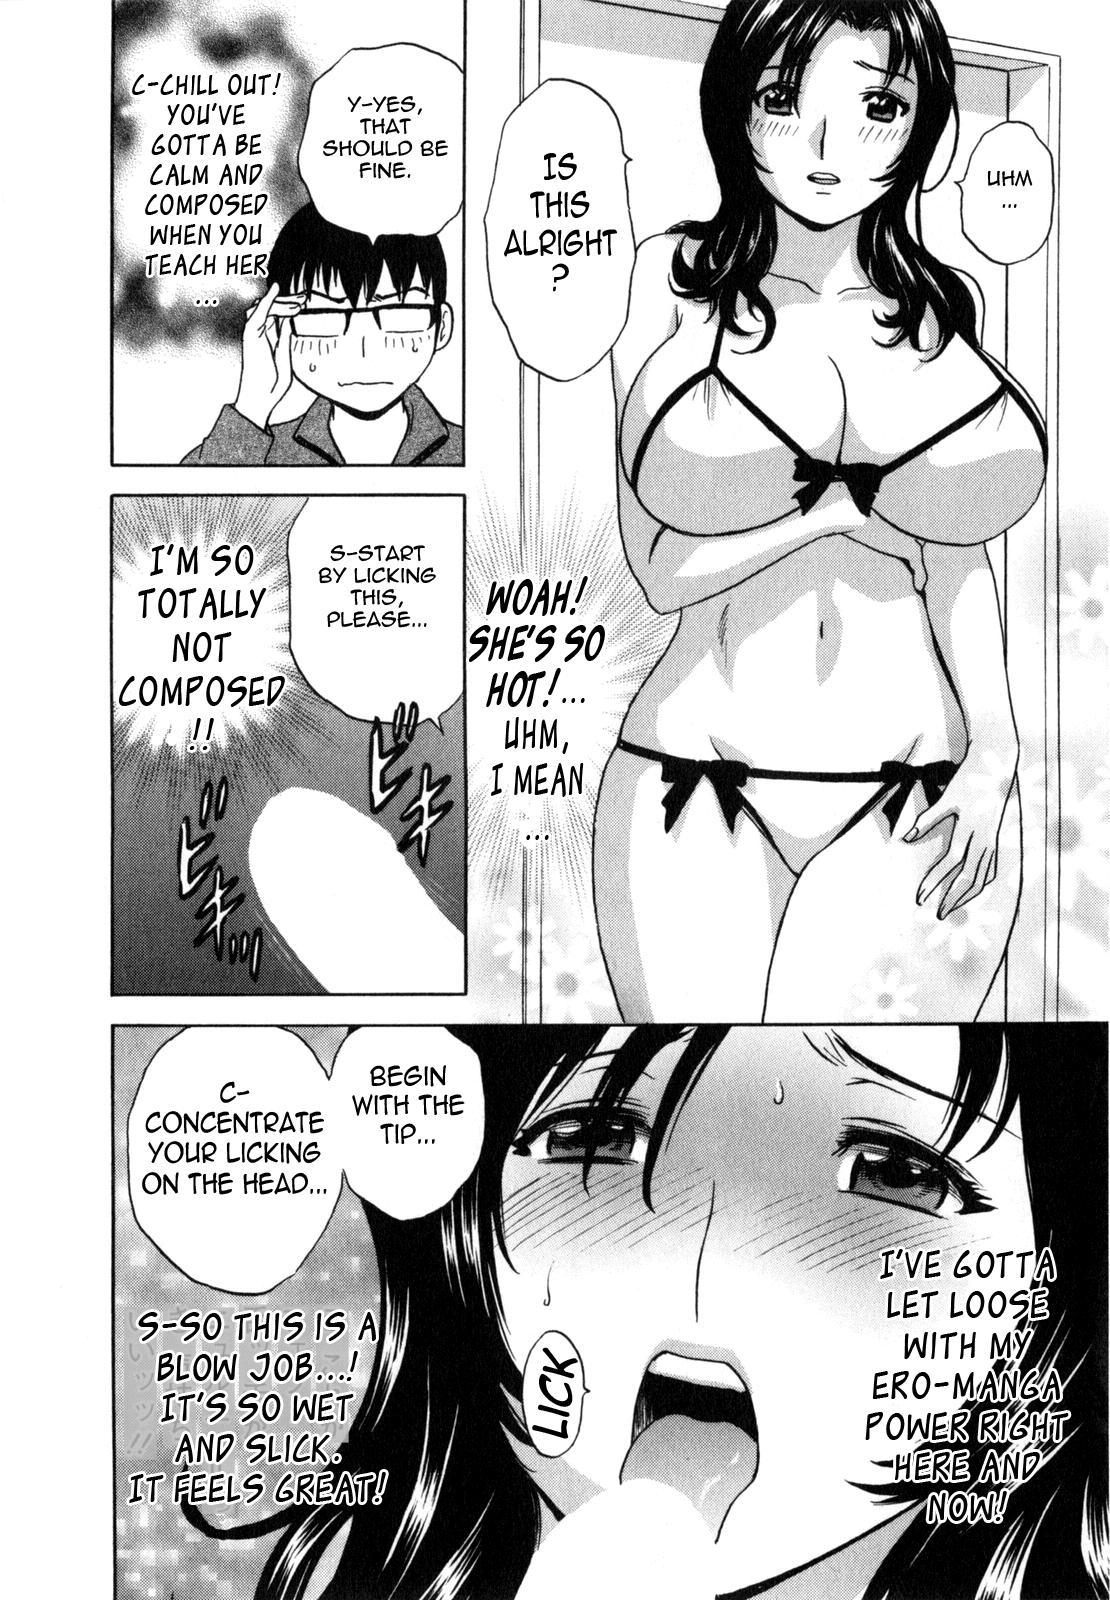 [Hidemaru] Life with Married Women Just Like a Manga 1 - Ch. 1-9 [English] {Tadanohito} 16